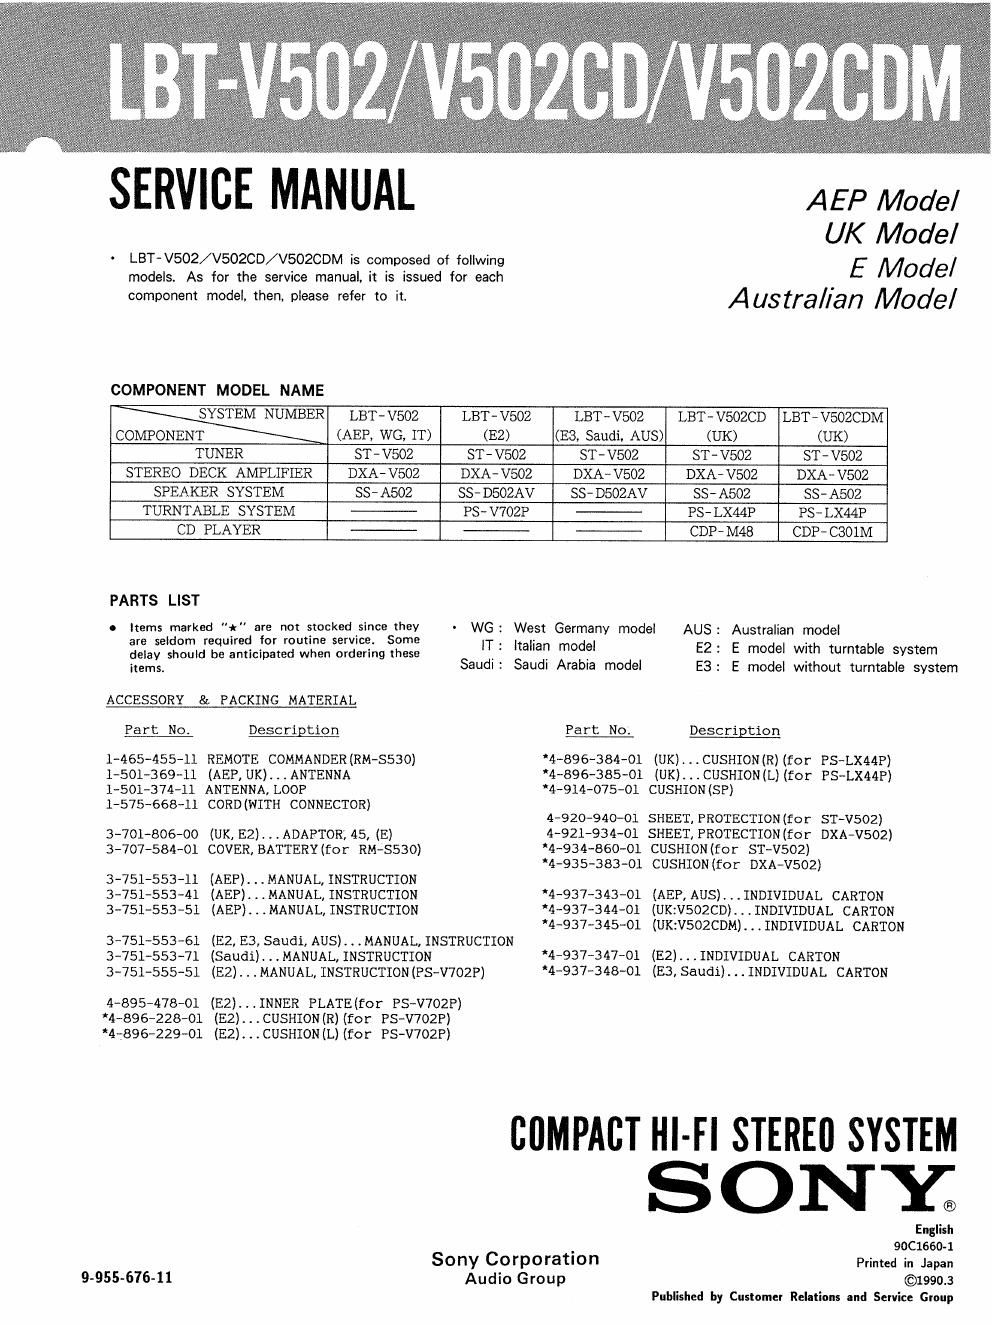 sony lbt v 502 cd service manual